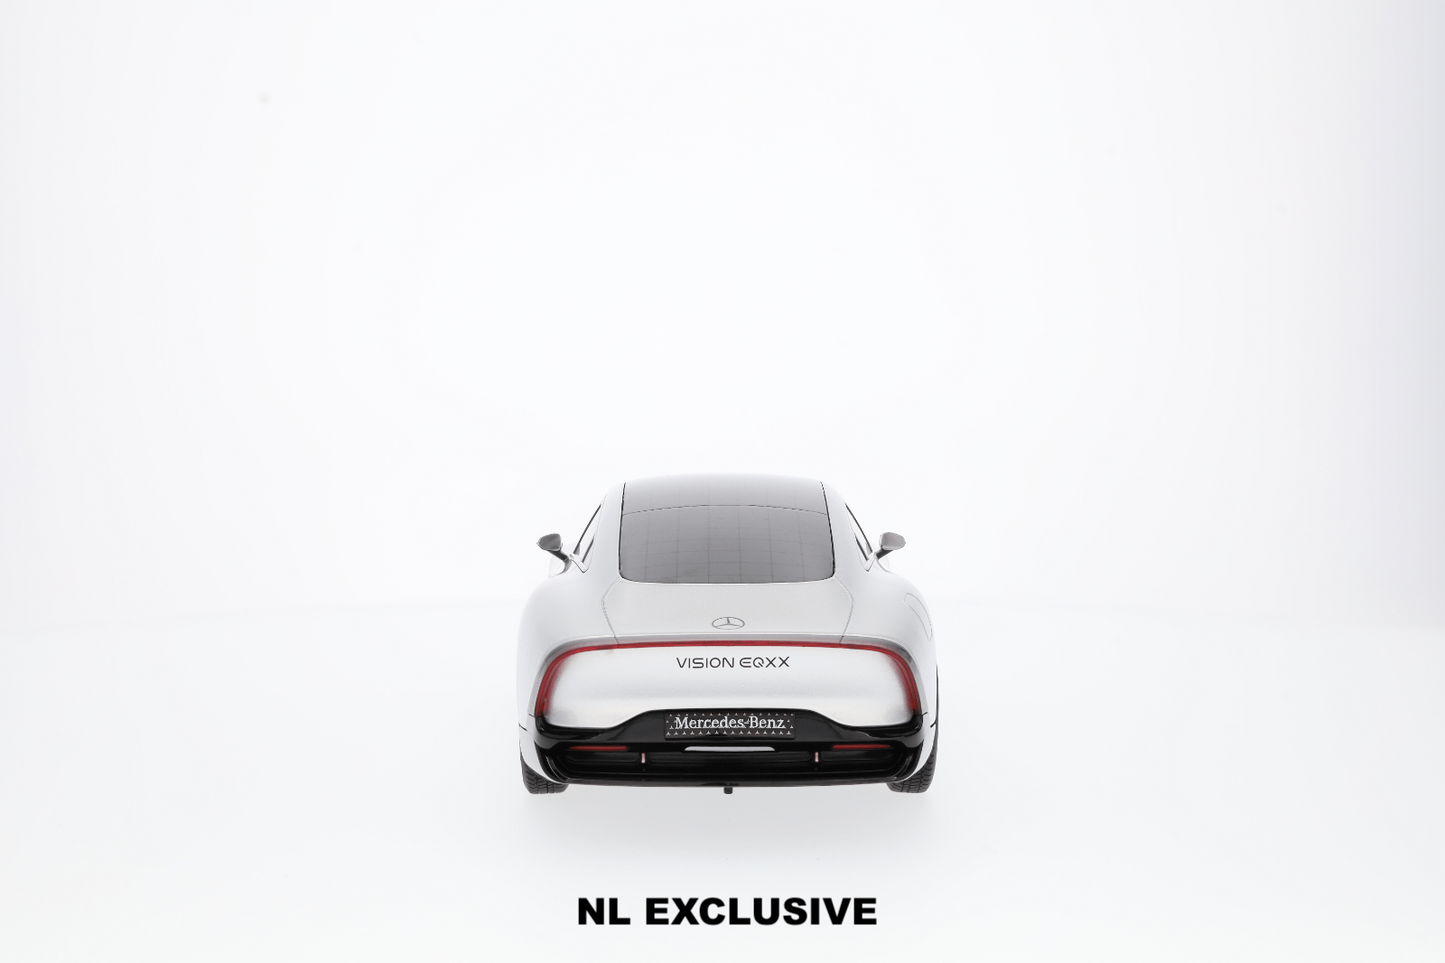 Mercedes Benz VISION EQXX Neu in OVP NZG Dealer Edition "1 of 1000" 1:18